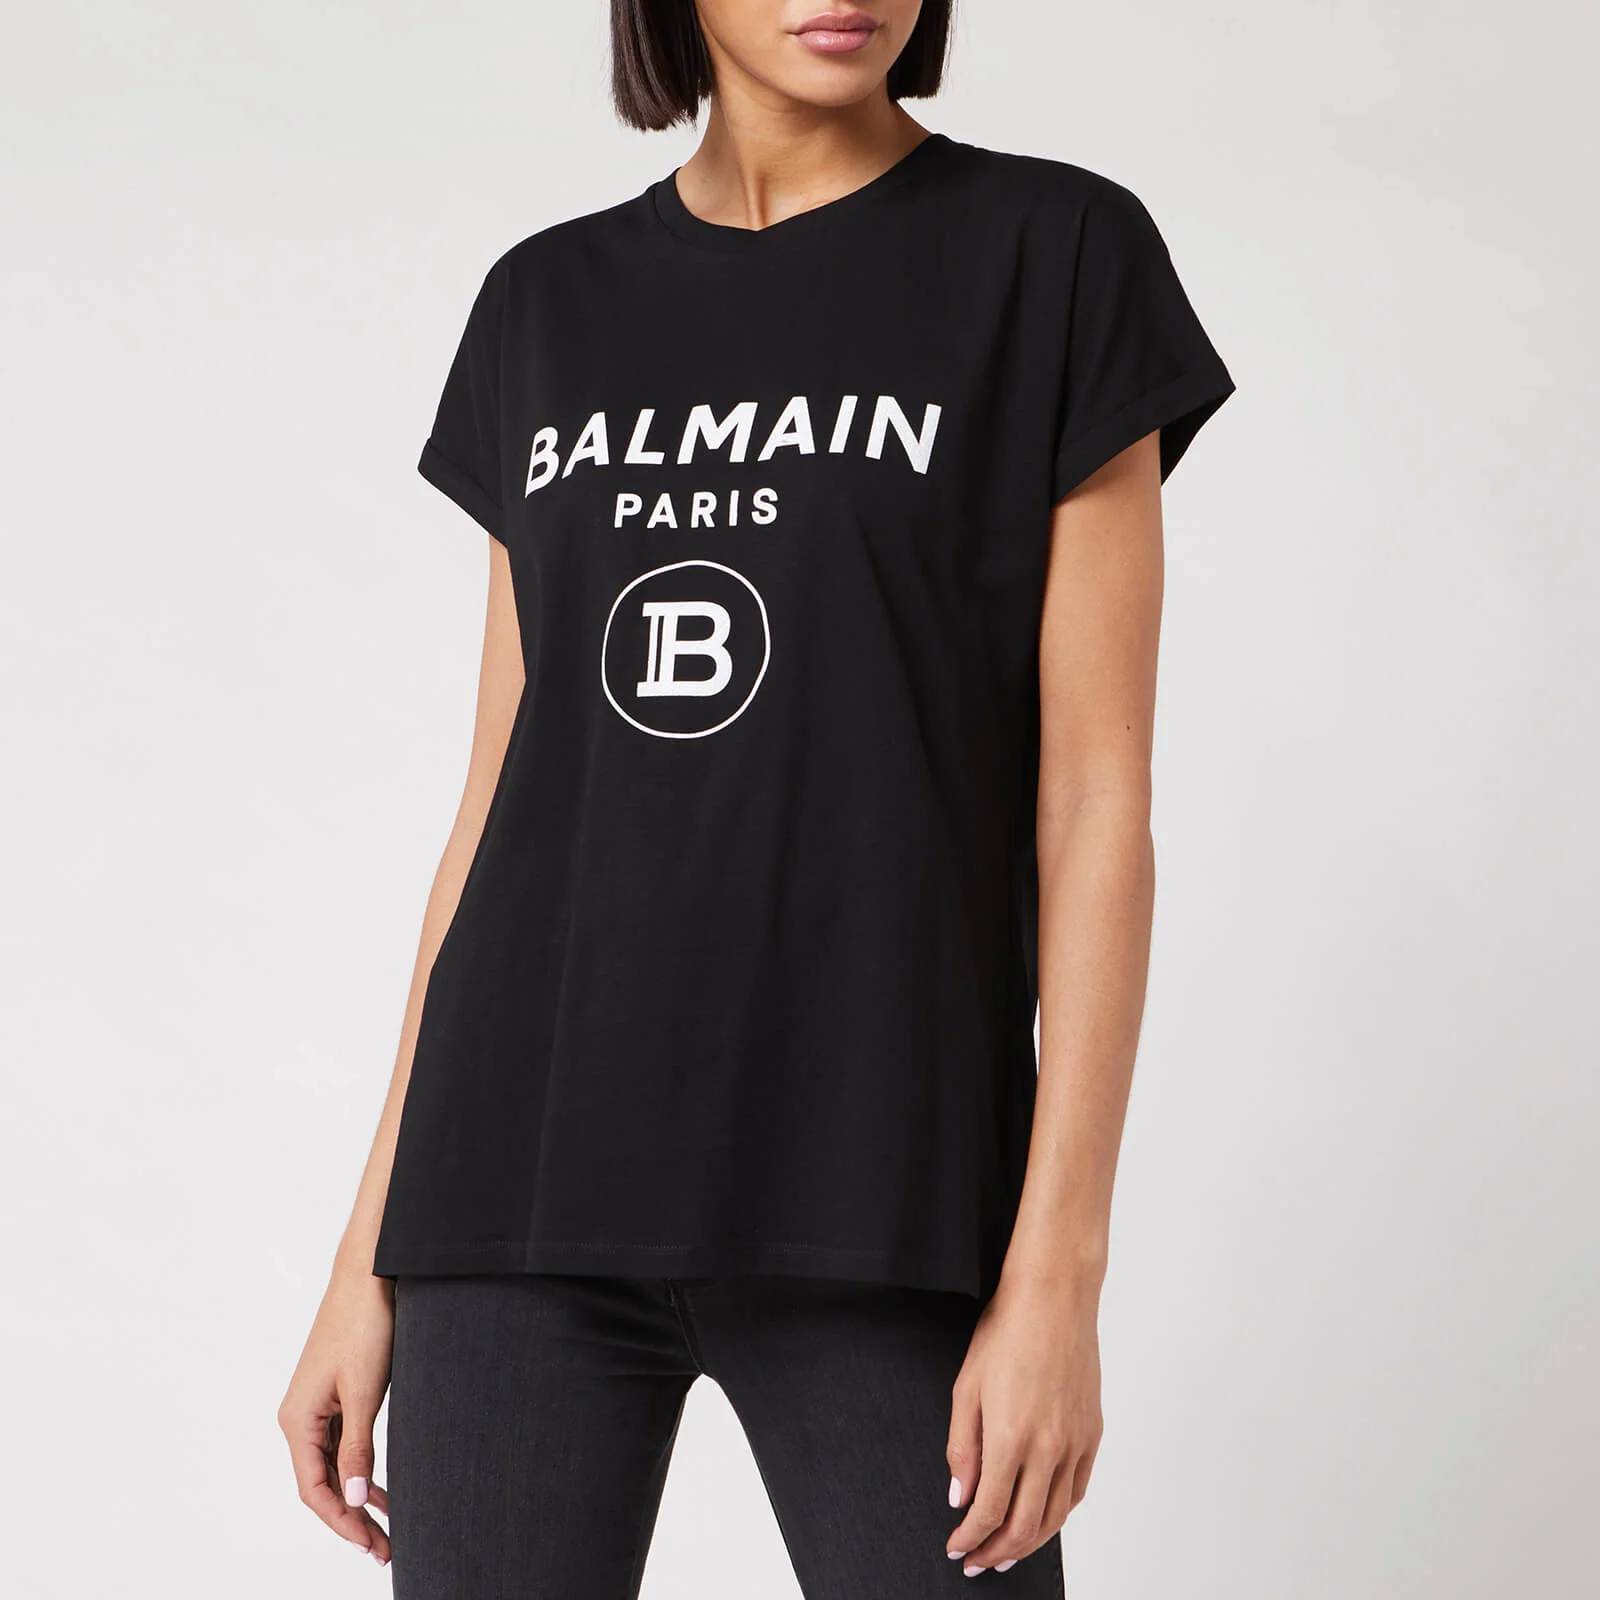 Balmain Women's Short Sleeve Glitter Logo T-Shirt - Black Image 1